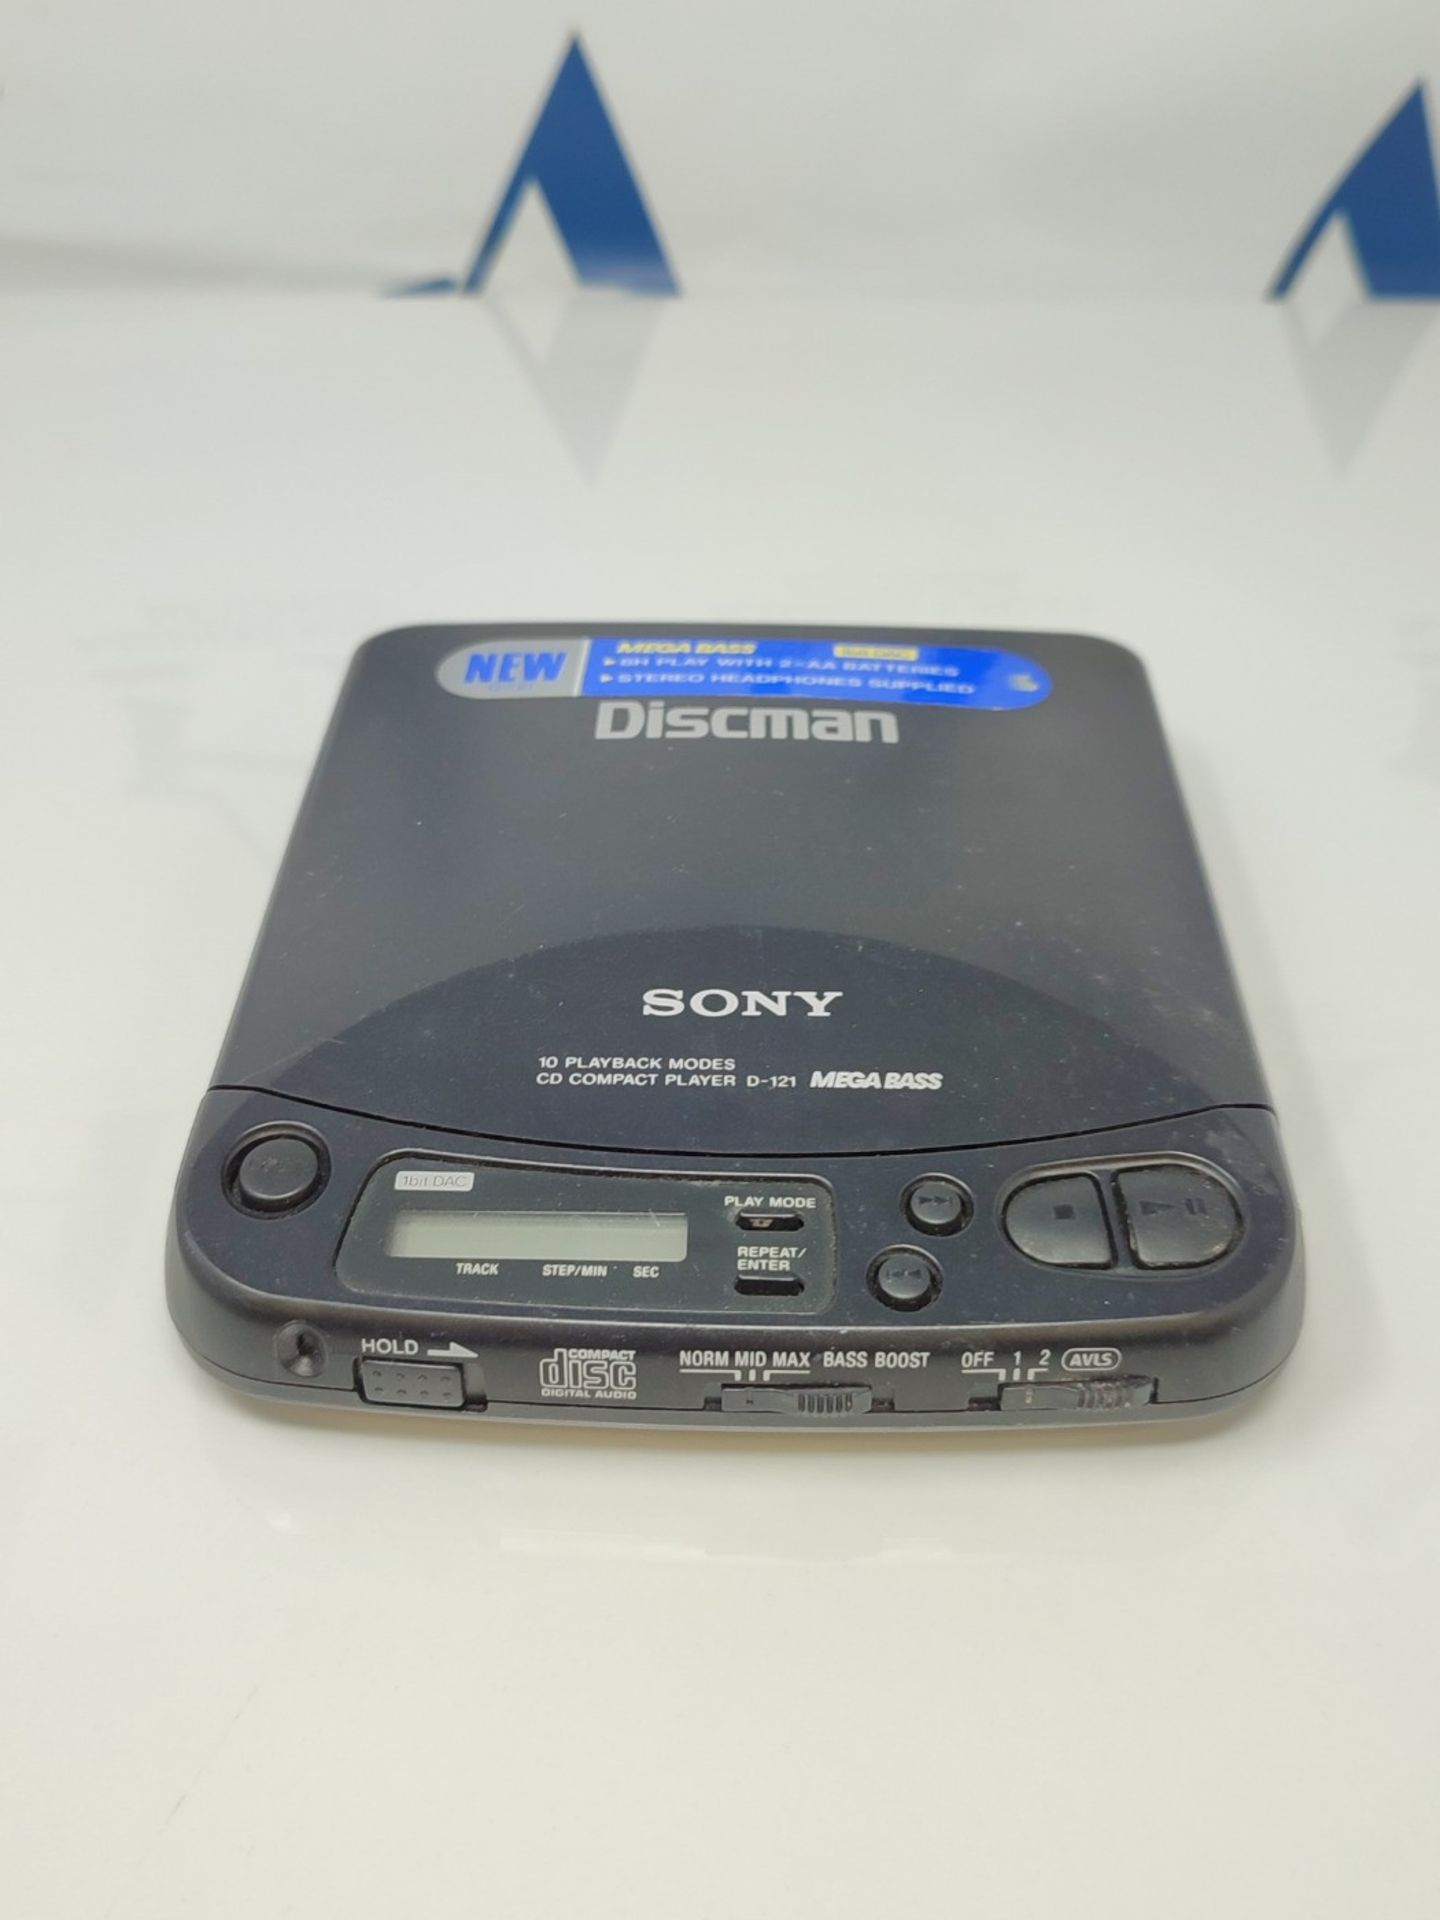 Sony Discman Portable Compact CD Player D-121 (Black)